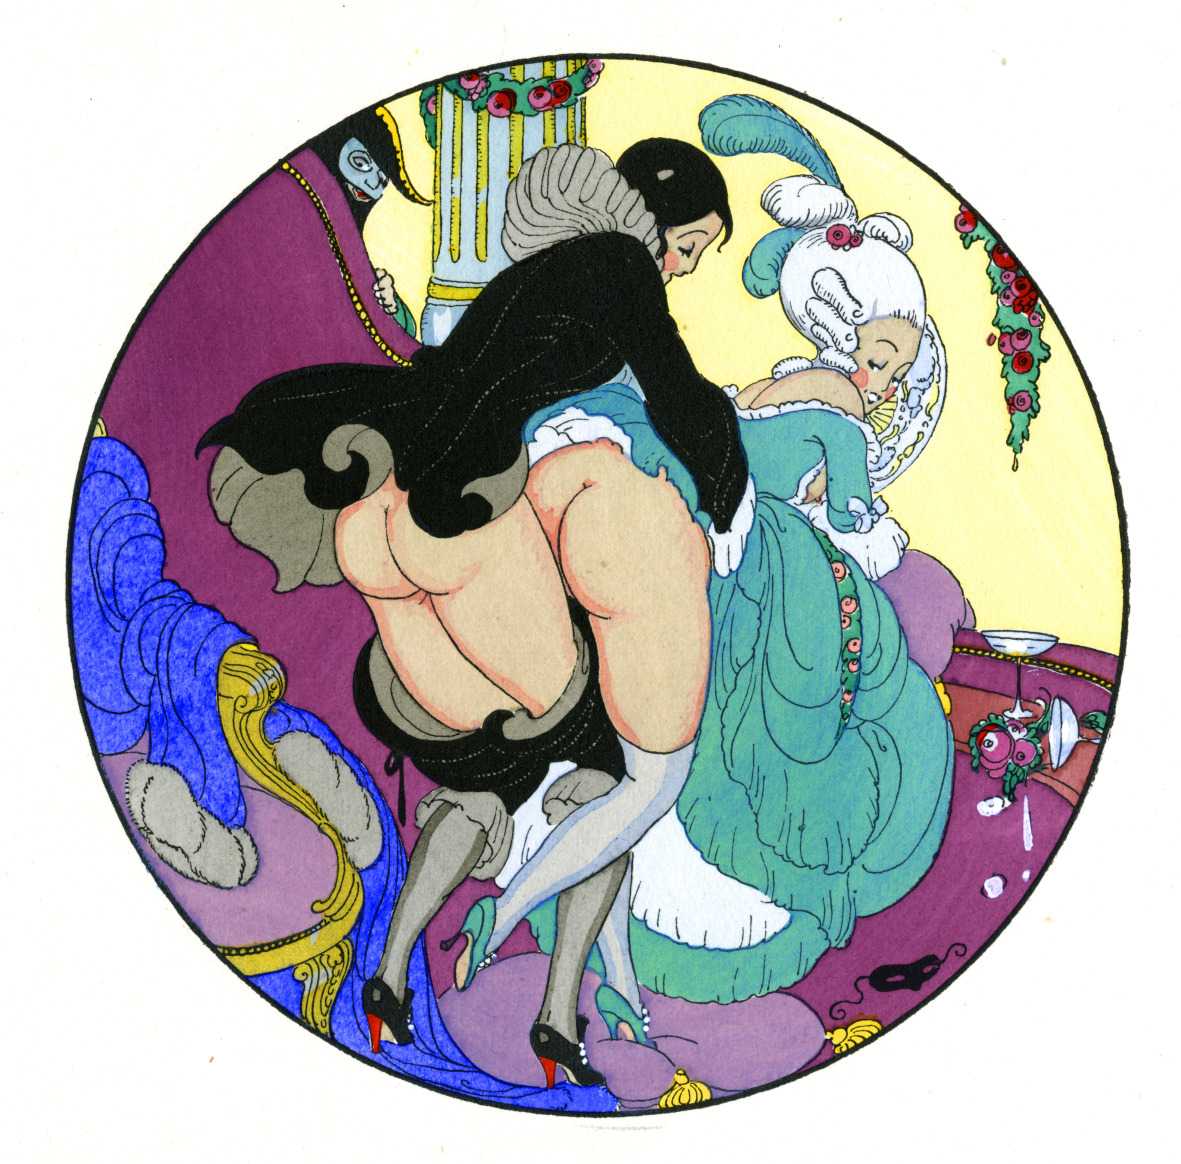 Gerda Wegener, Aprés Le Bal in Les Délassements D’Eros, 1925.